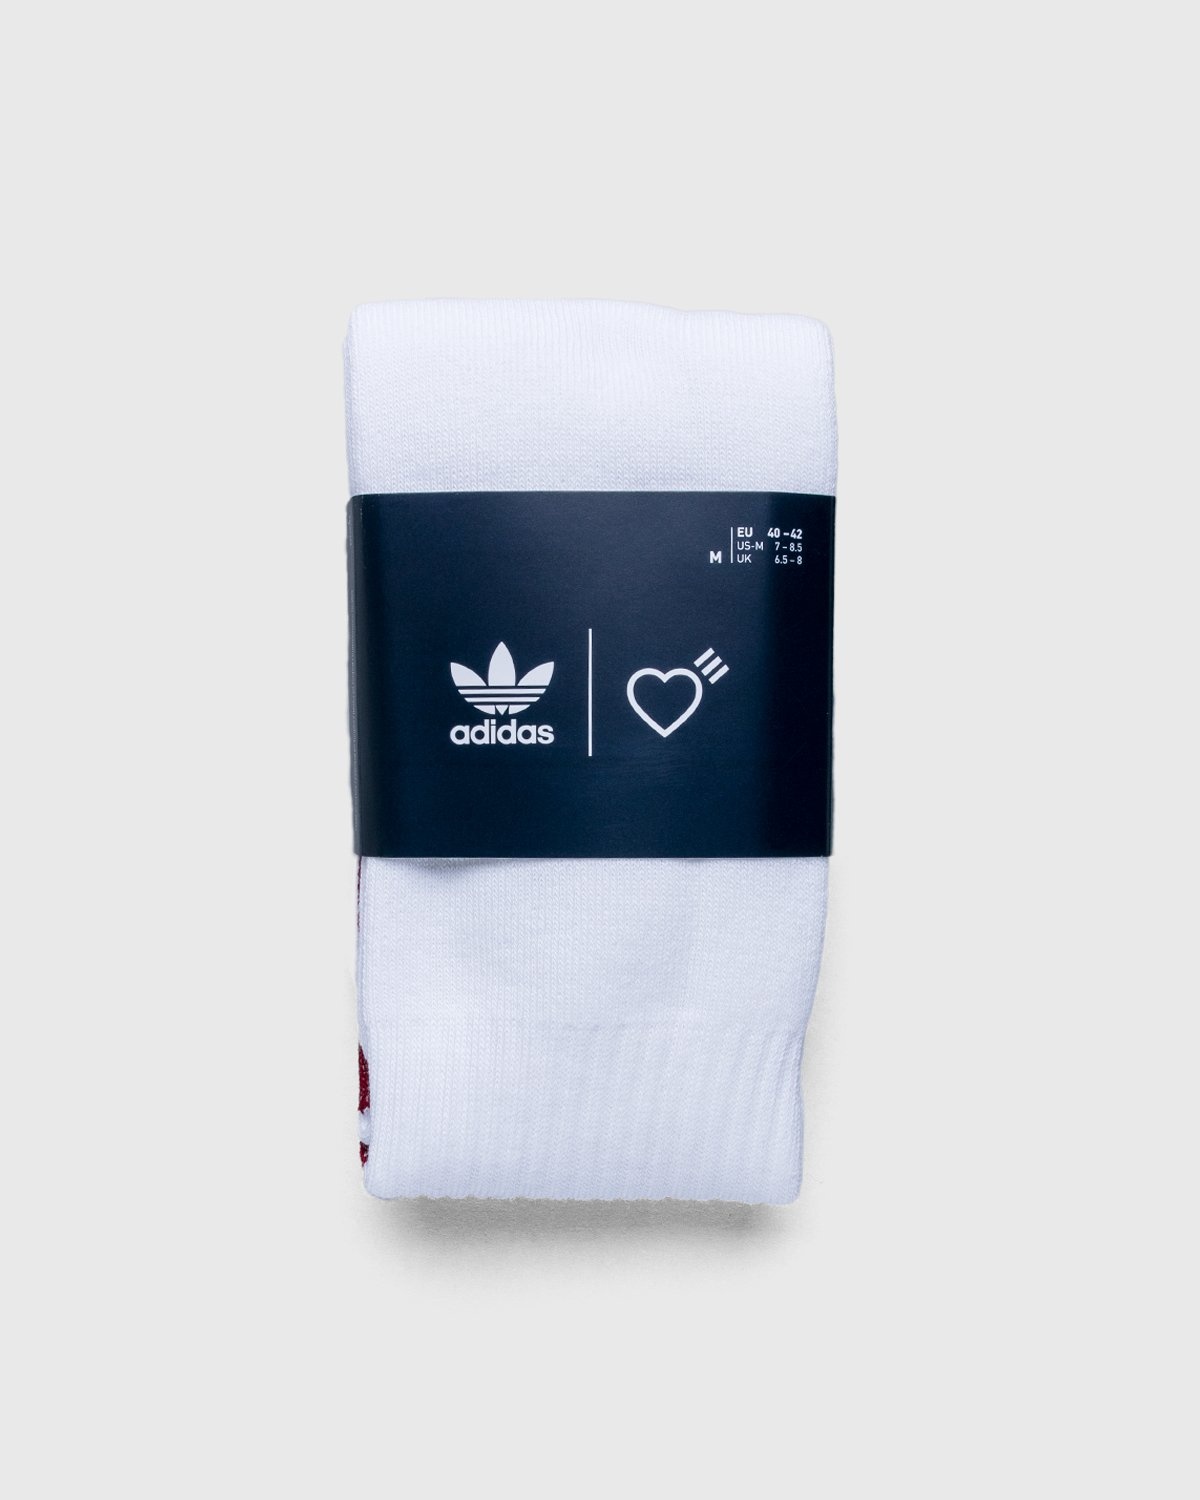 adidas Originals x Human Made – Socks White - Socks - White - Image 2